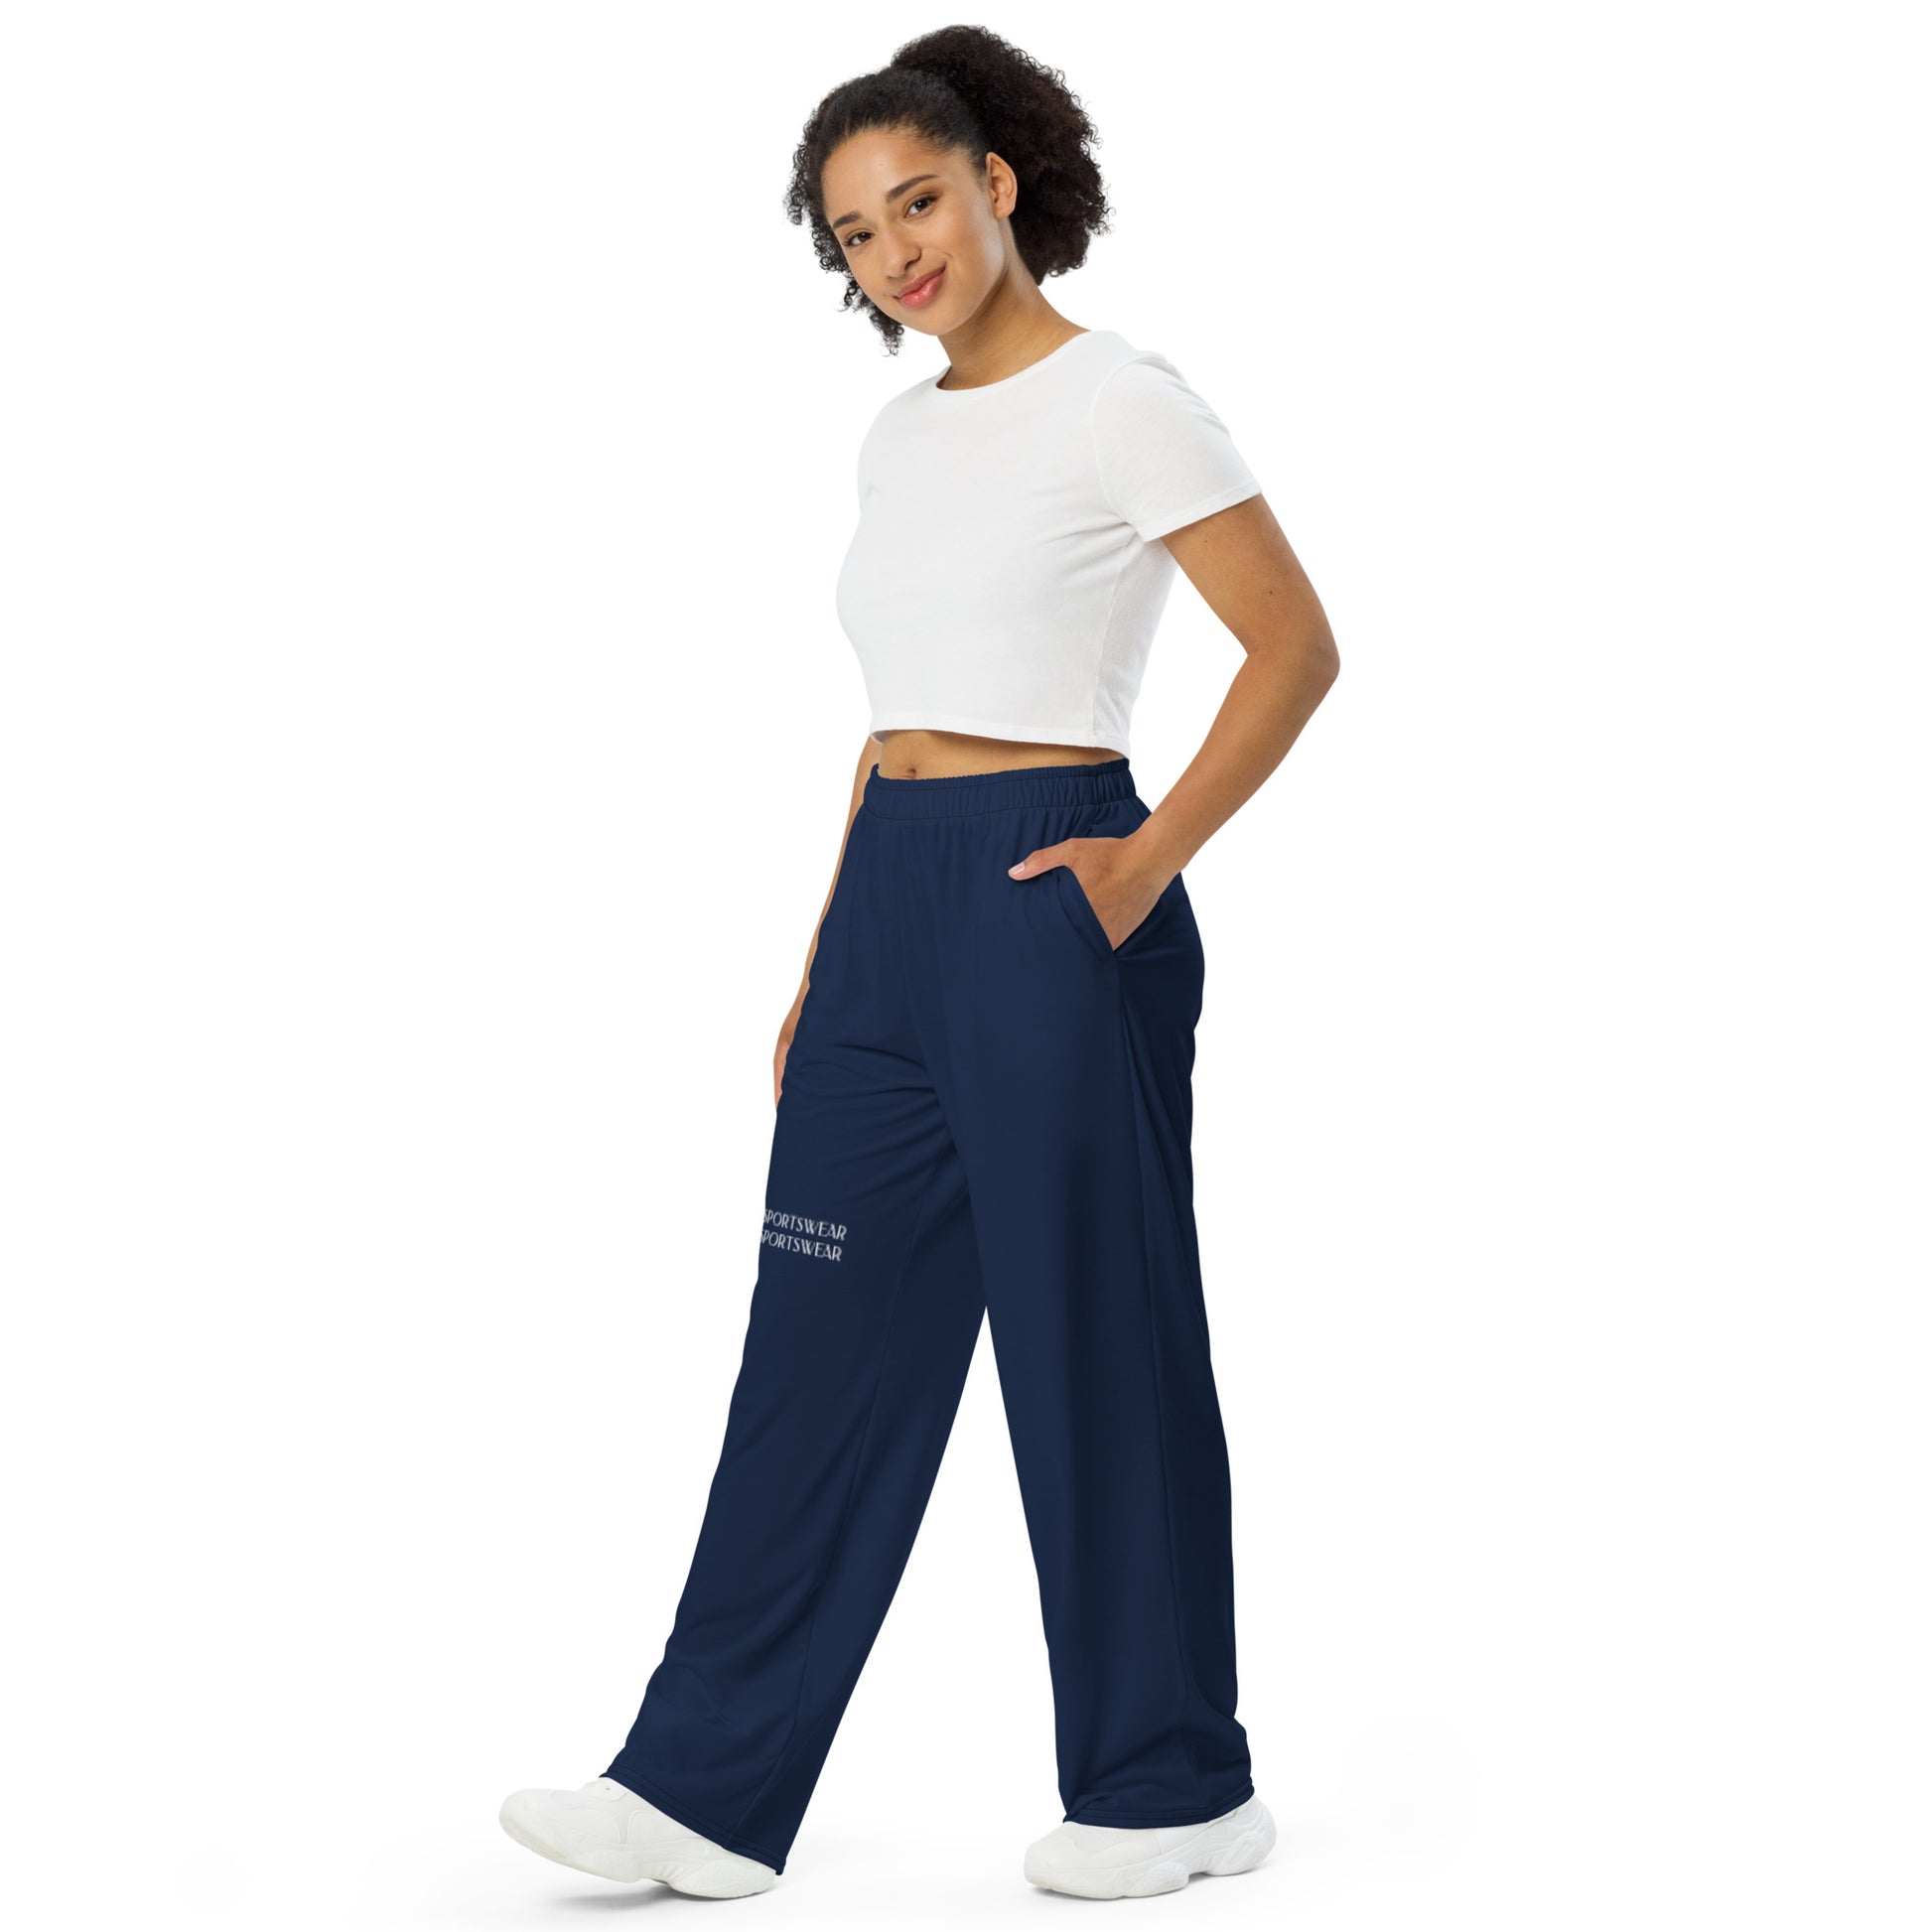 Humble Sportswear, women’s color match pants, loungewear bottoms, navy color pants